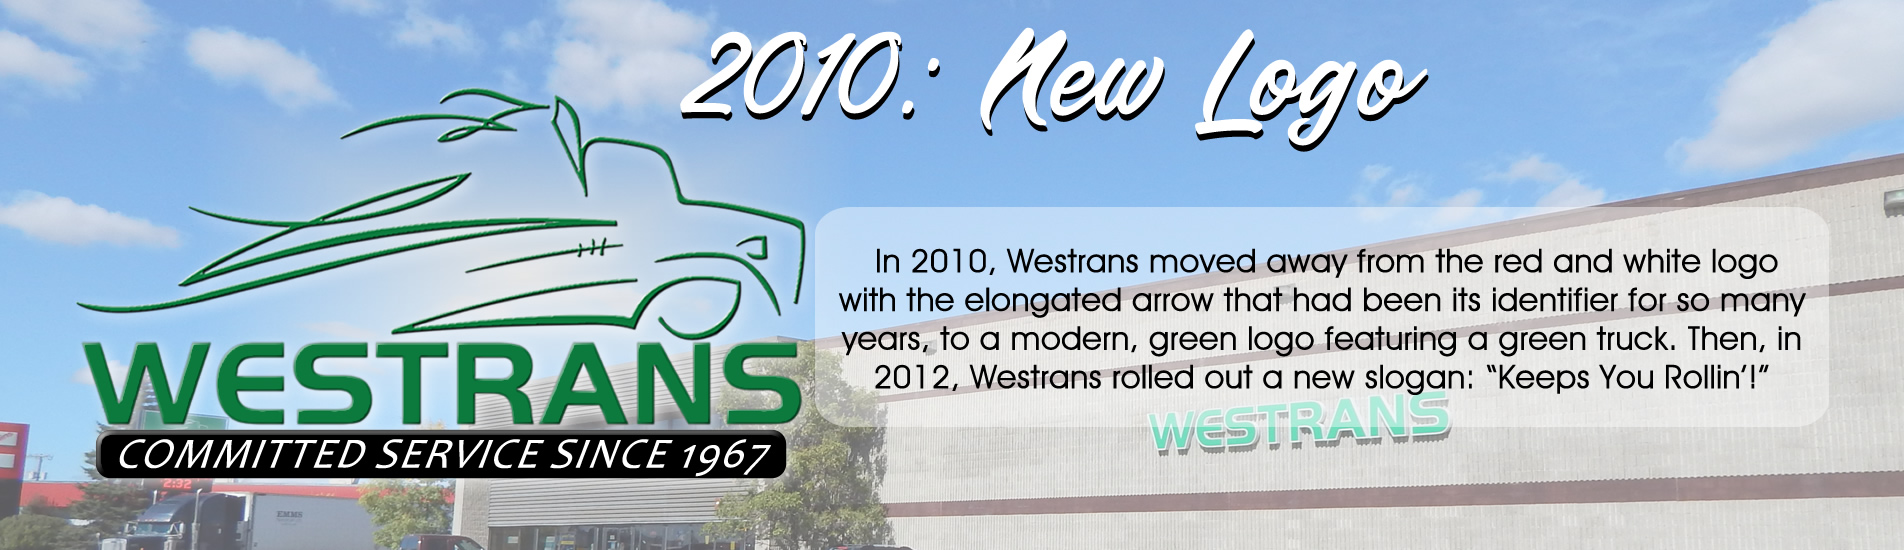 westrans-new-logo-2010